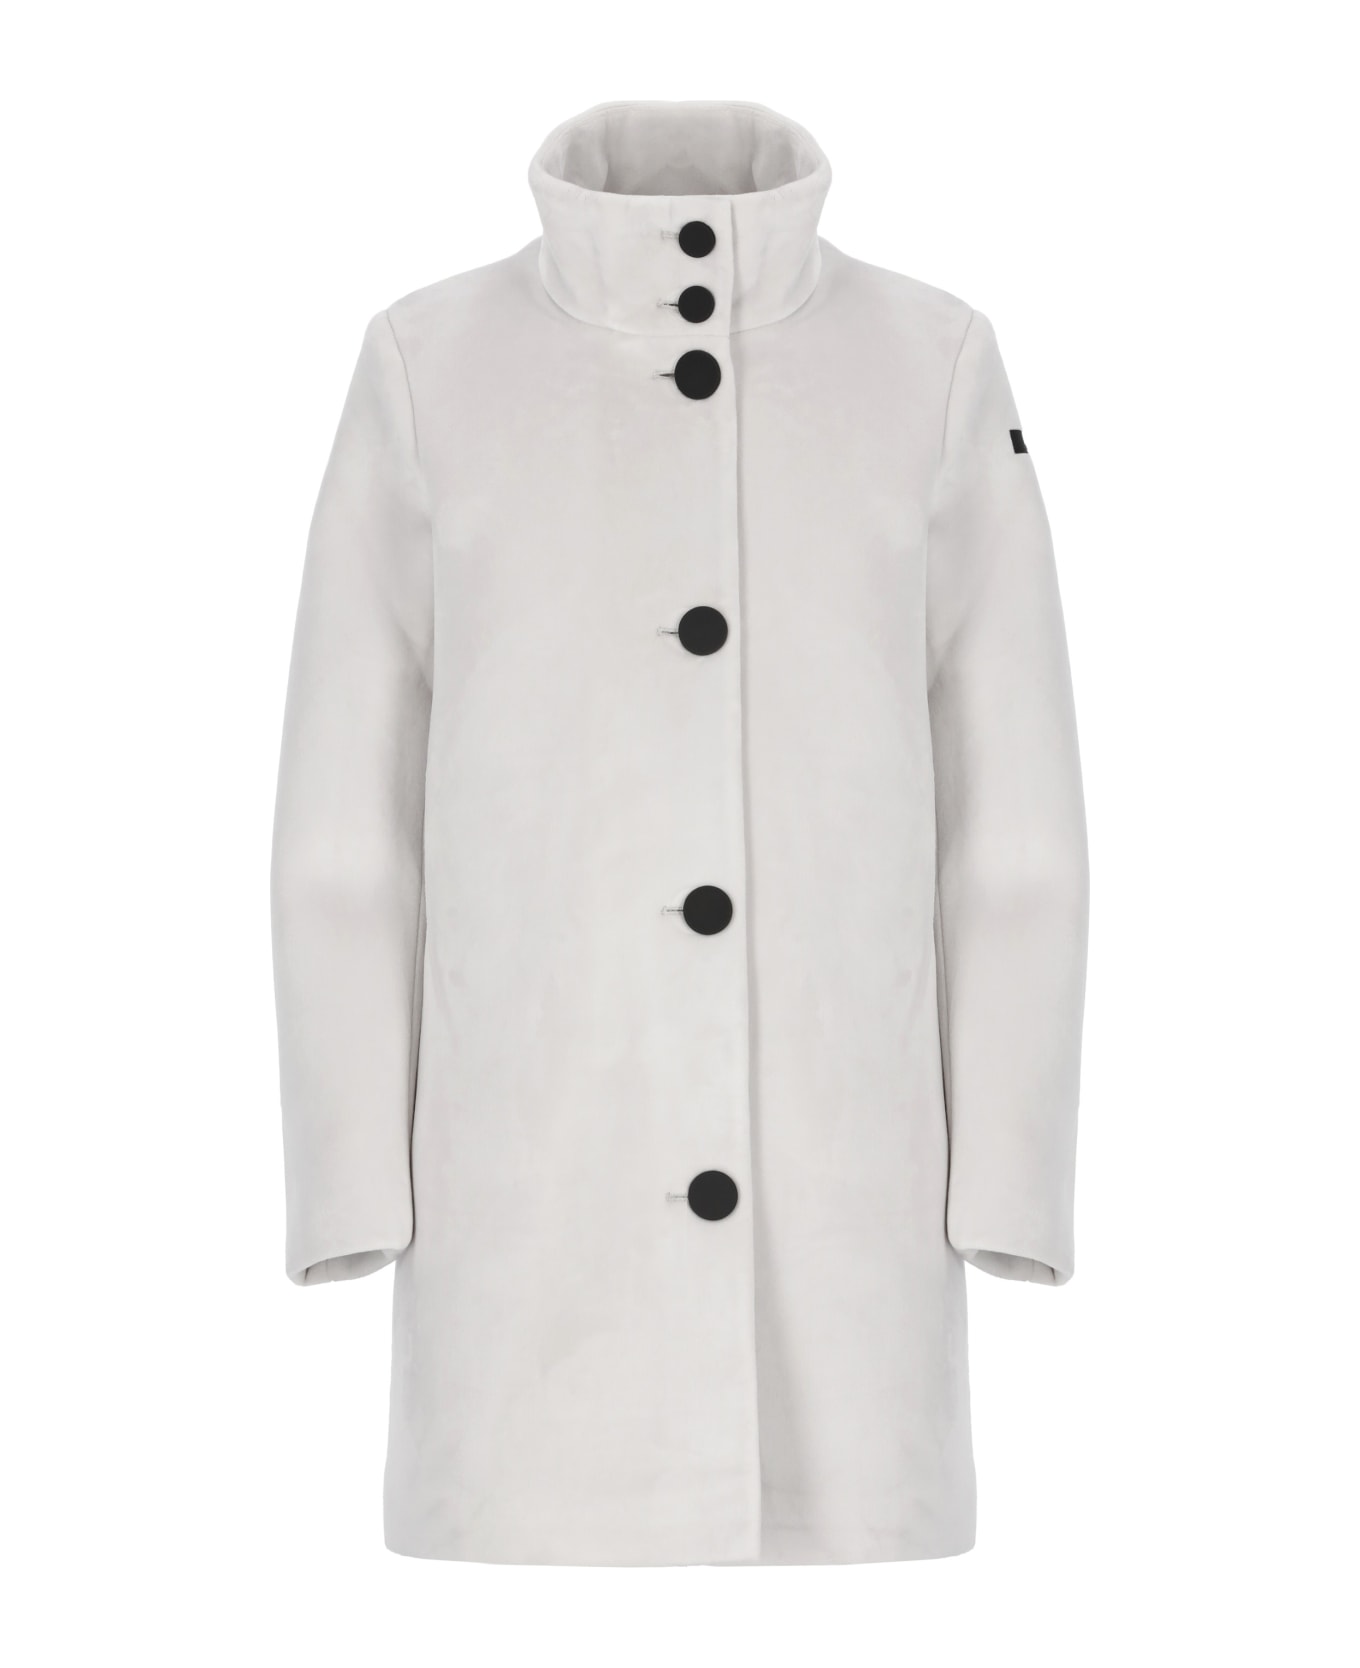 RRD - Roberto Ricci Design blazer Neo Wom Coat Coat - GHIACCIO